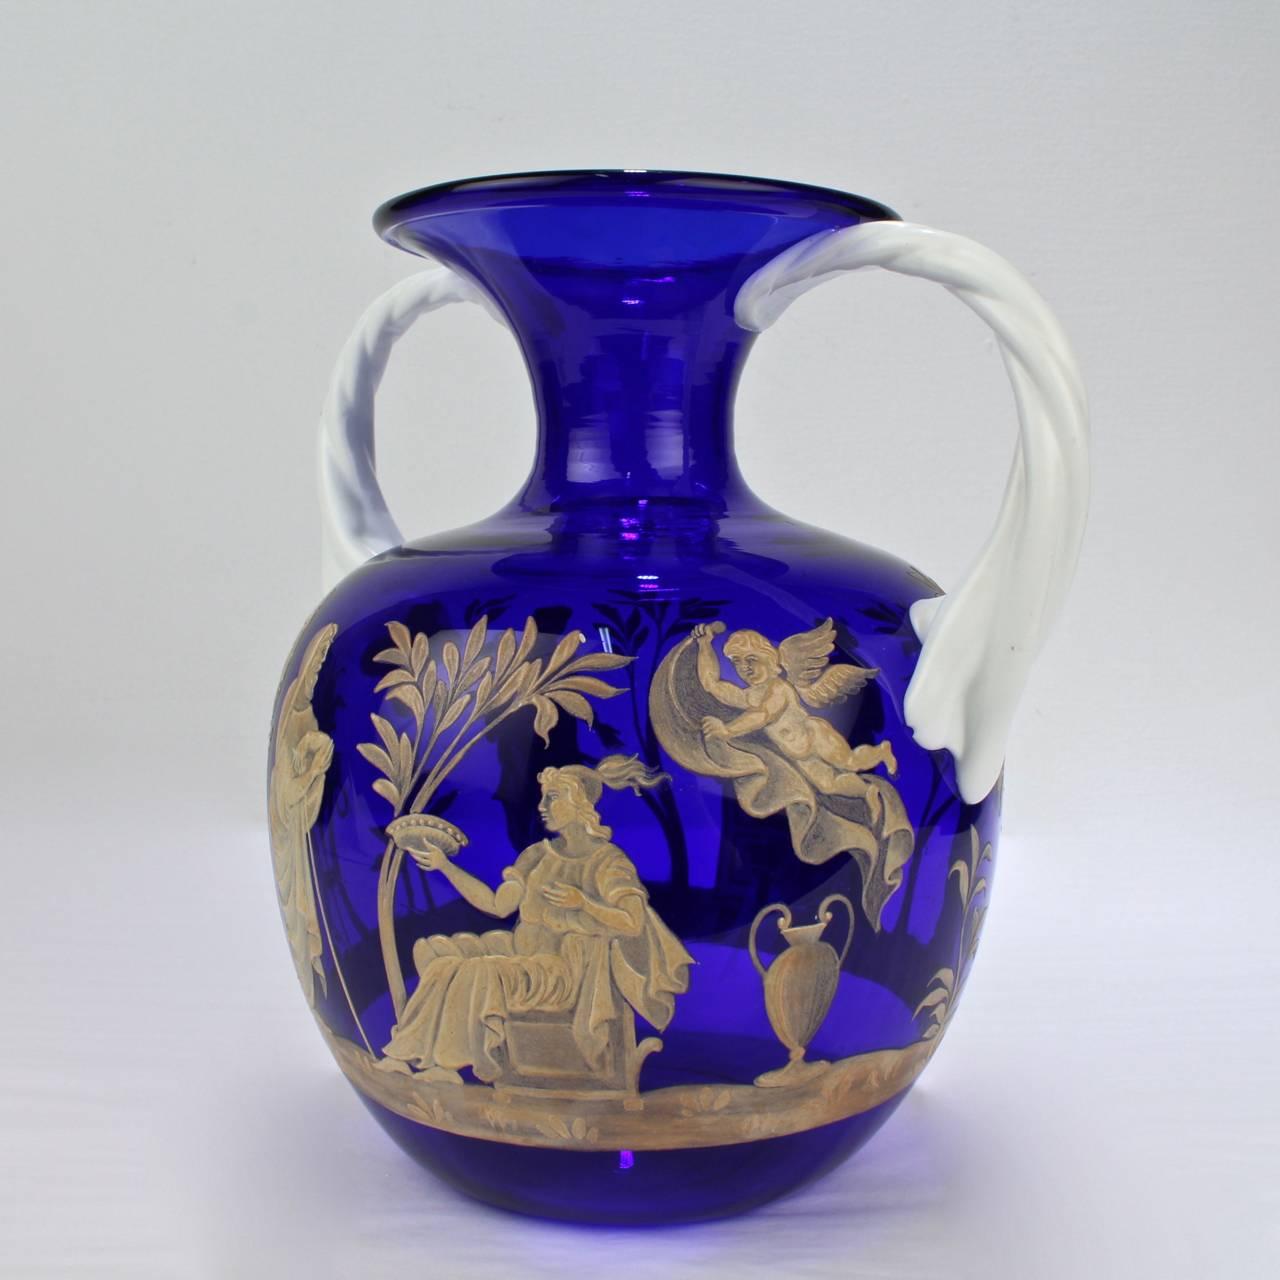 Pauly & Co Mid-Century Modern Blue & White Murano / Venetian Glass Portland Vase In Good Condition For Sale In Philadelphia, PA